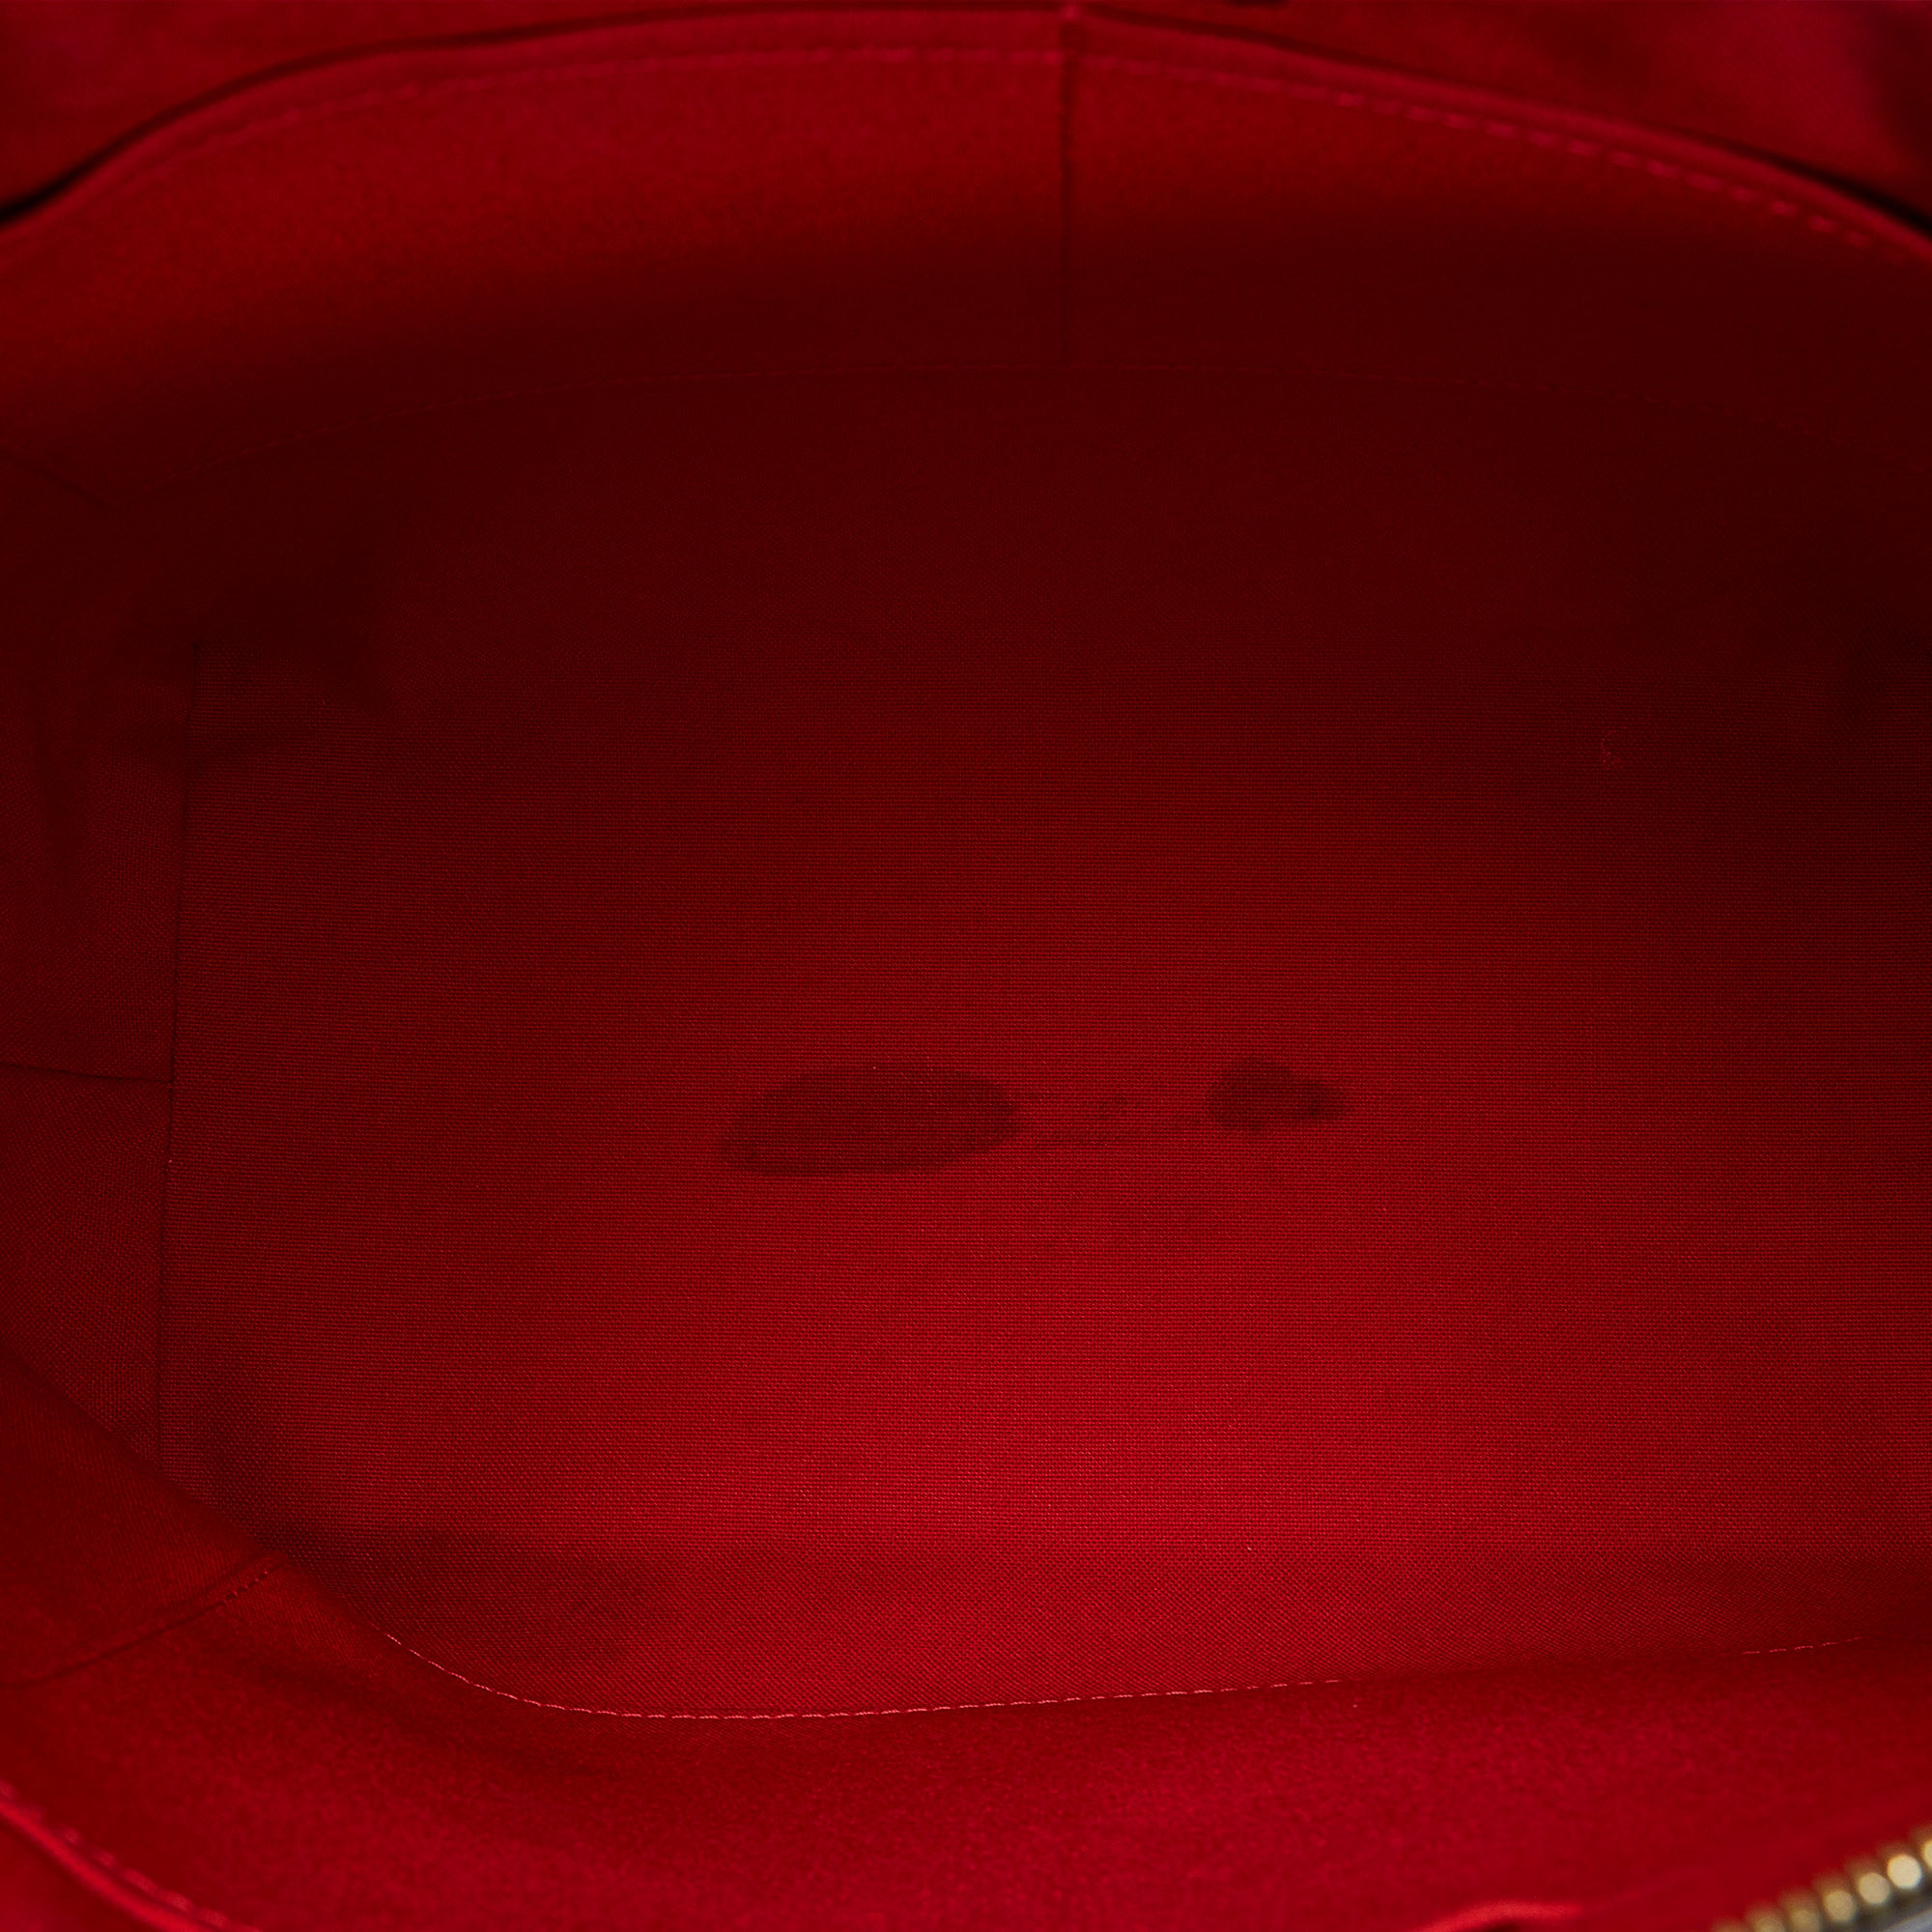 Louis Vuitton Damier Ebene Westminster GM Tote Shoulder Handbag